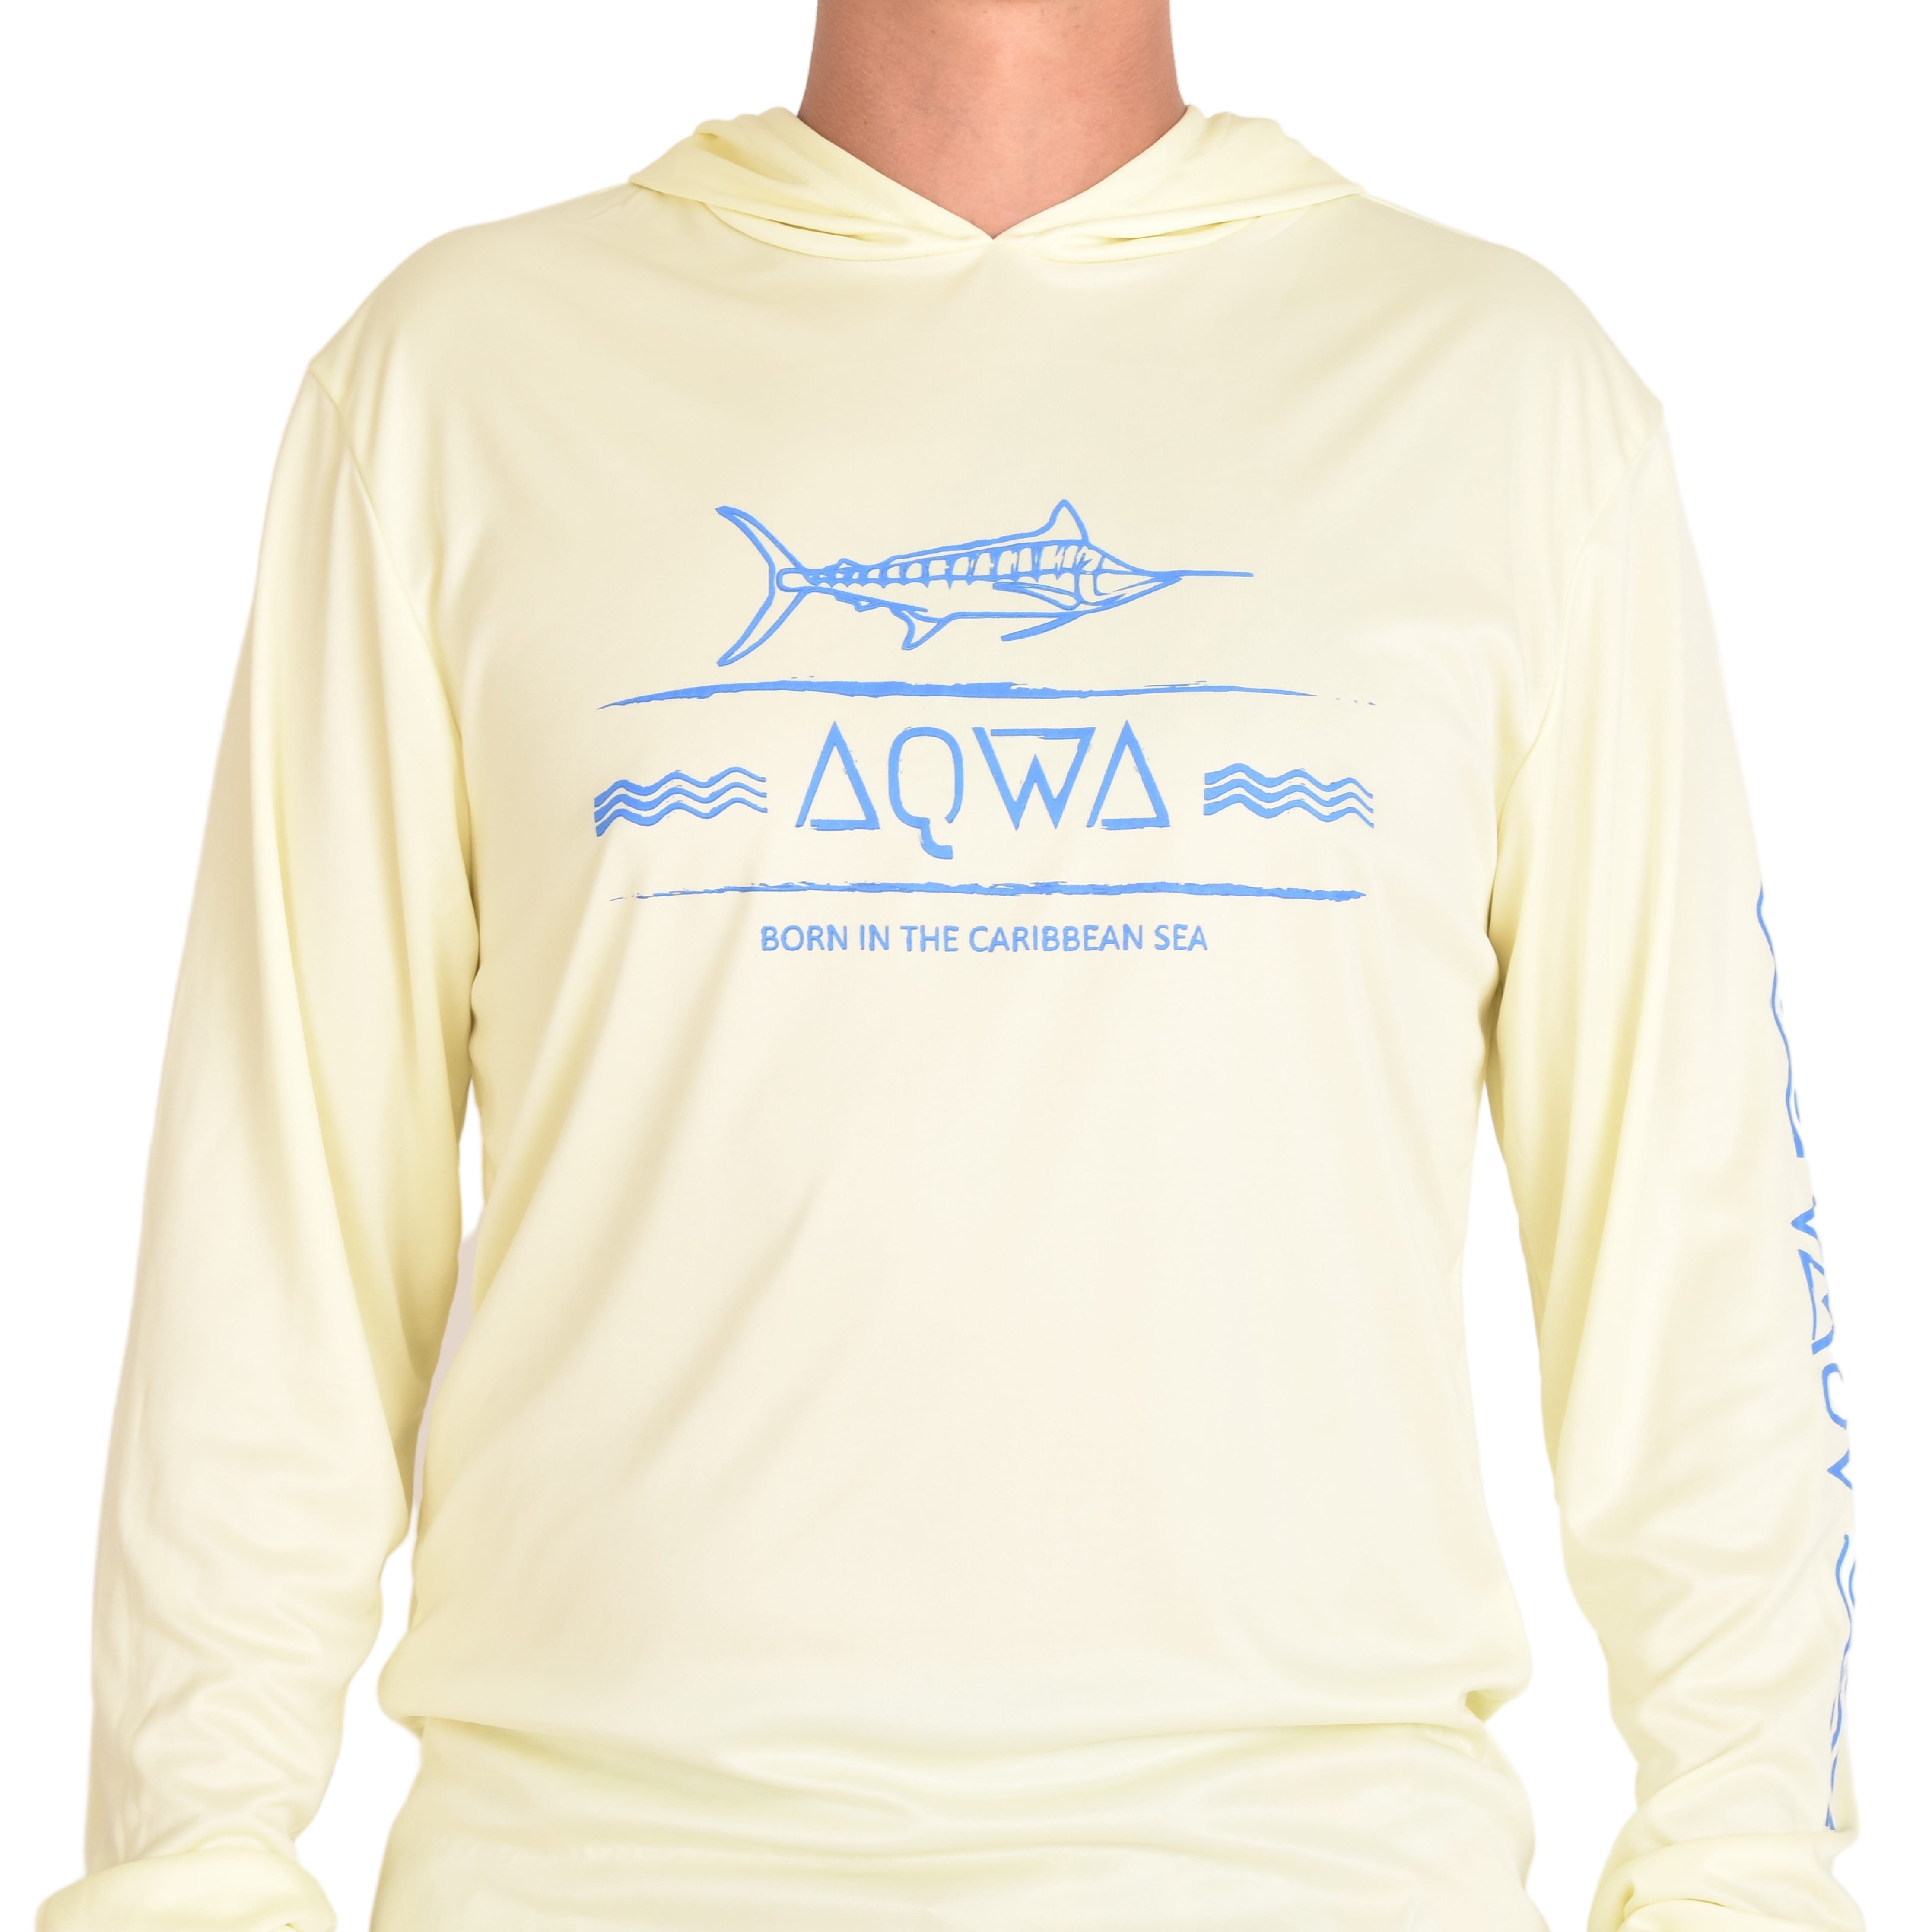 SeaGuard Marlin Womens Long Sleeve Fishing Shirt S